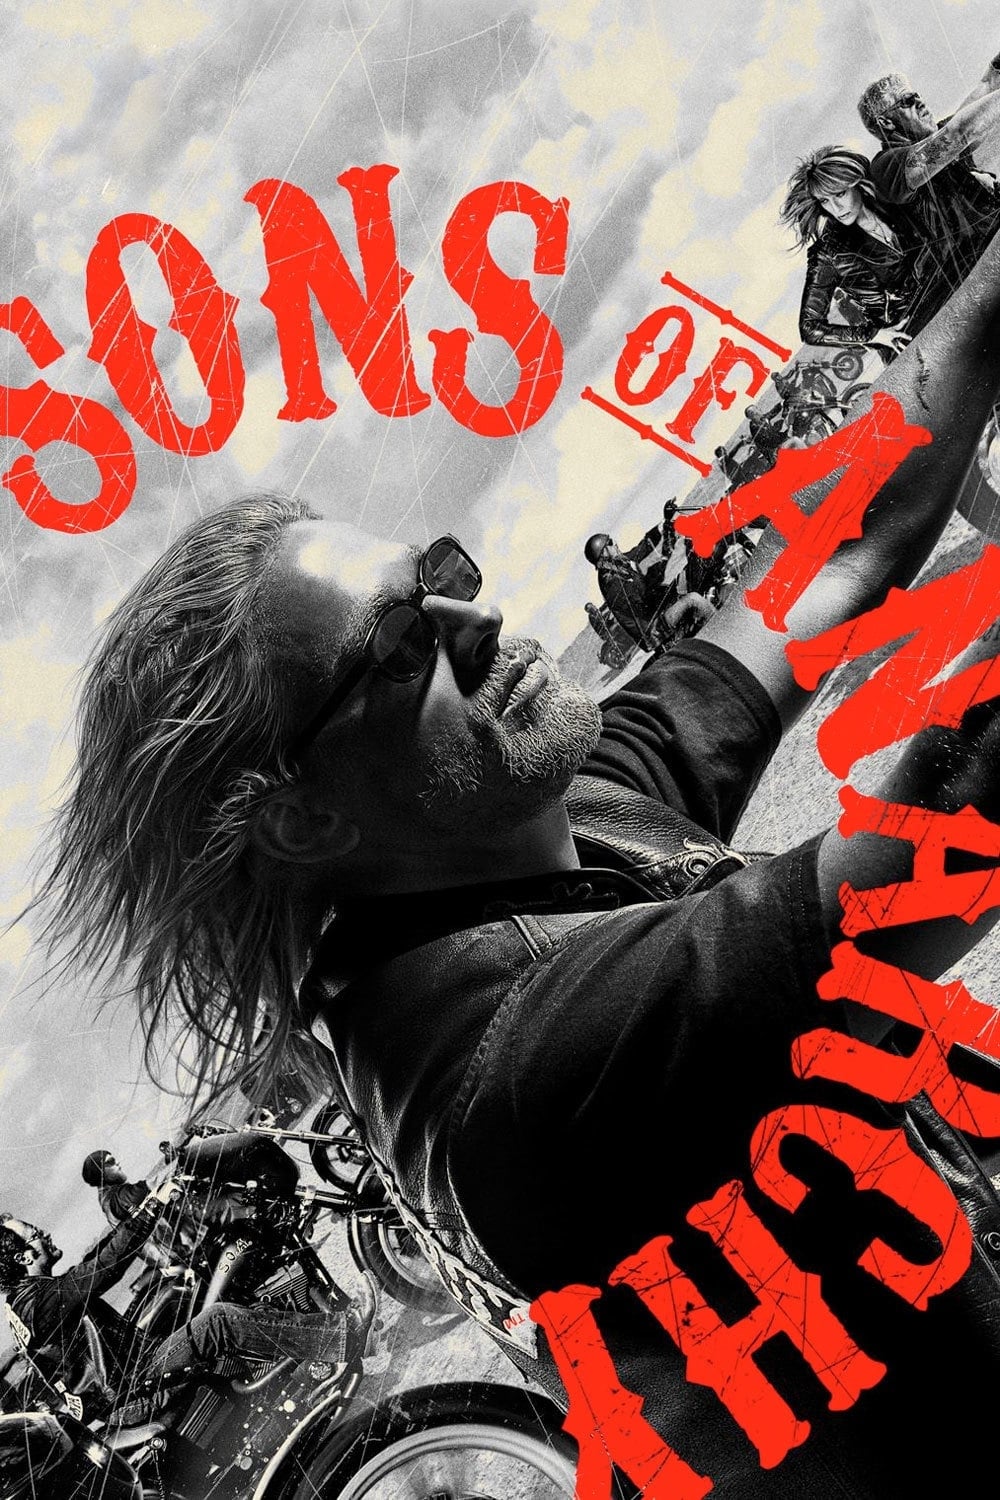 Sons of Anarchy (2008 - 2014) Seizoen 2 Disc 1 BD50